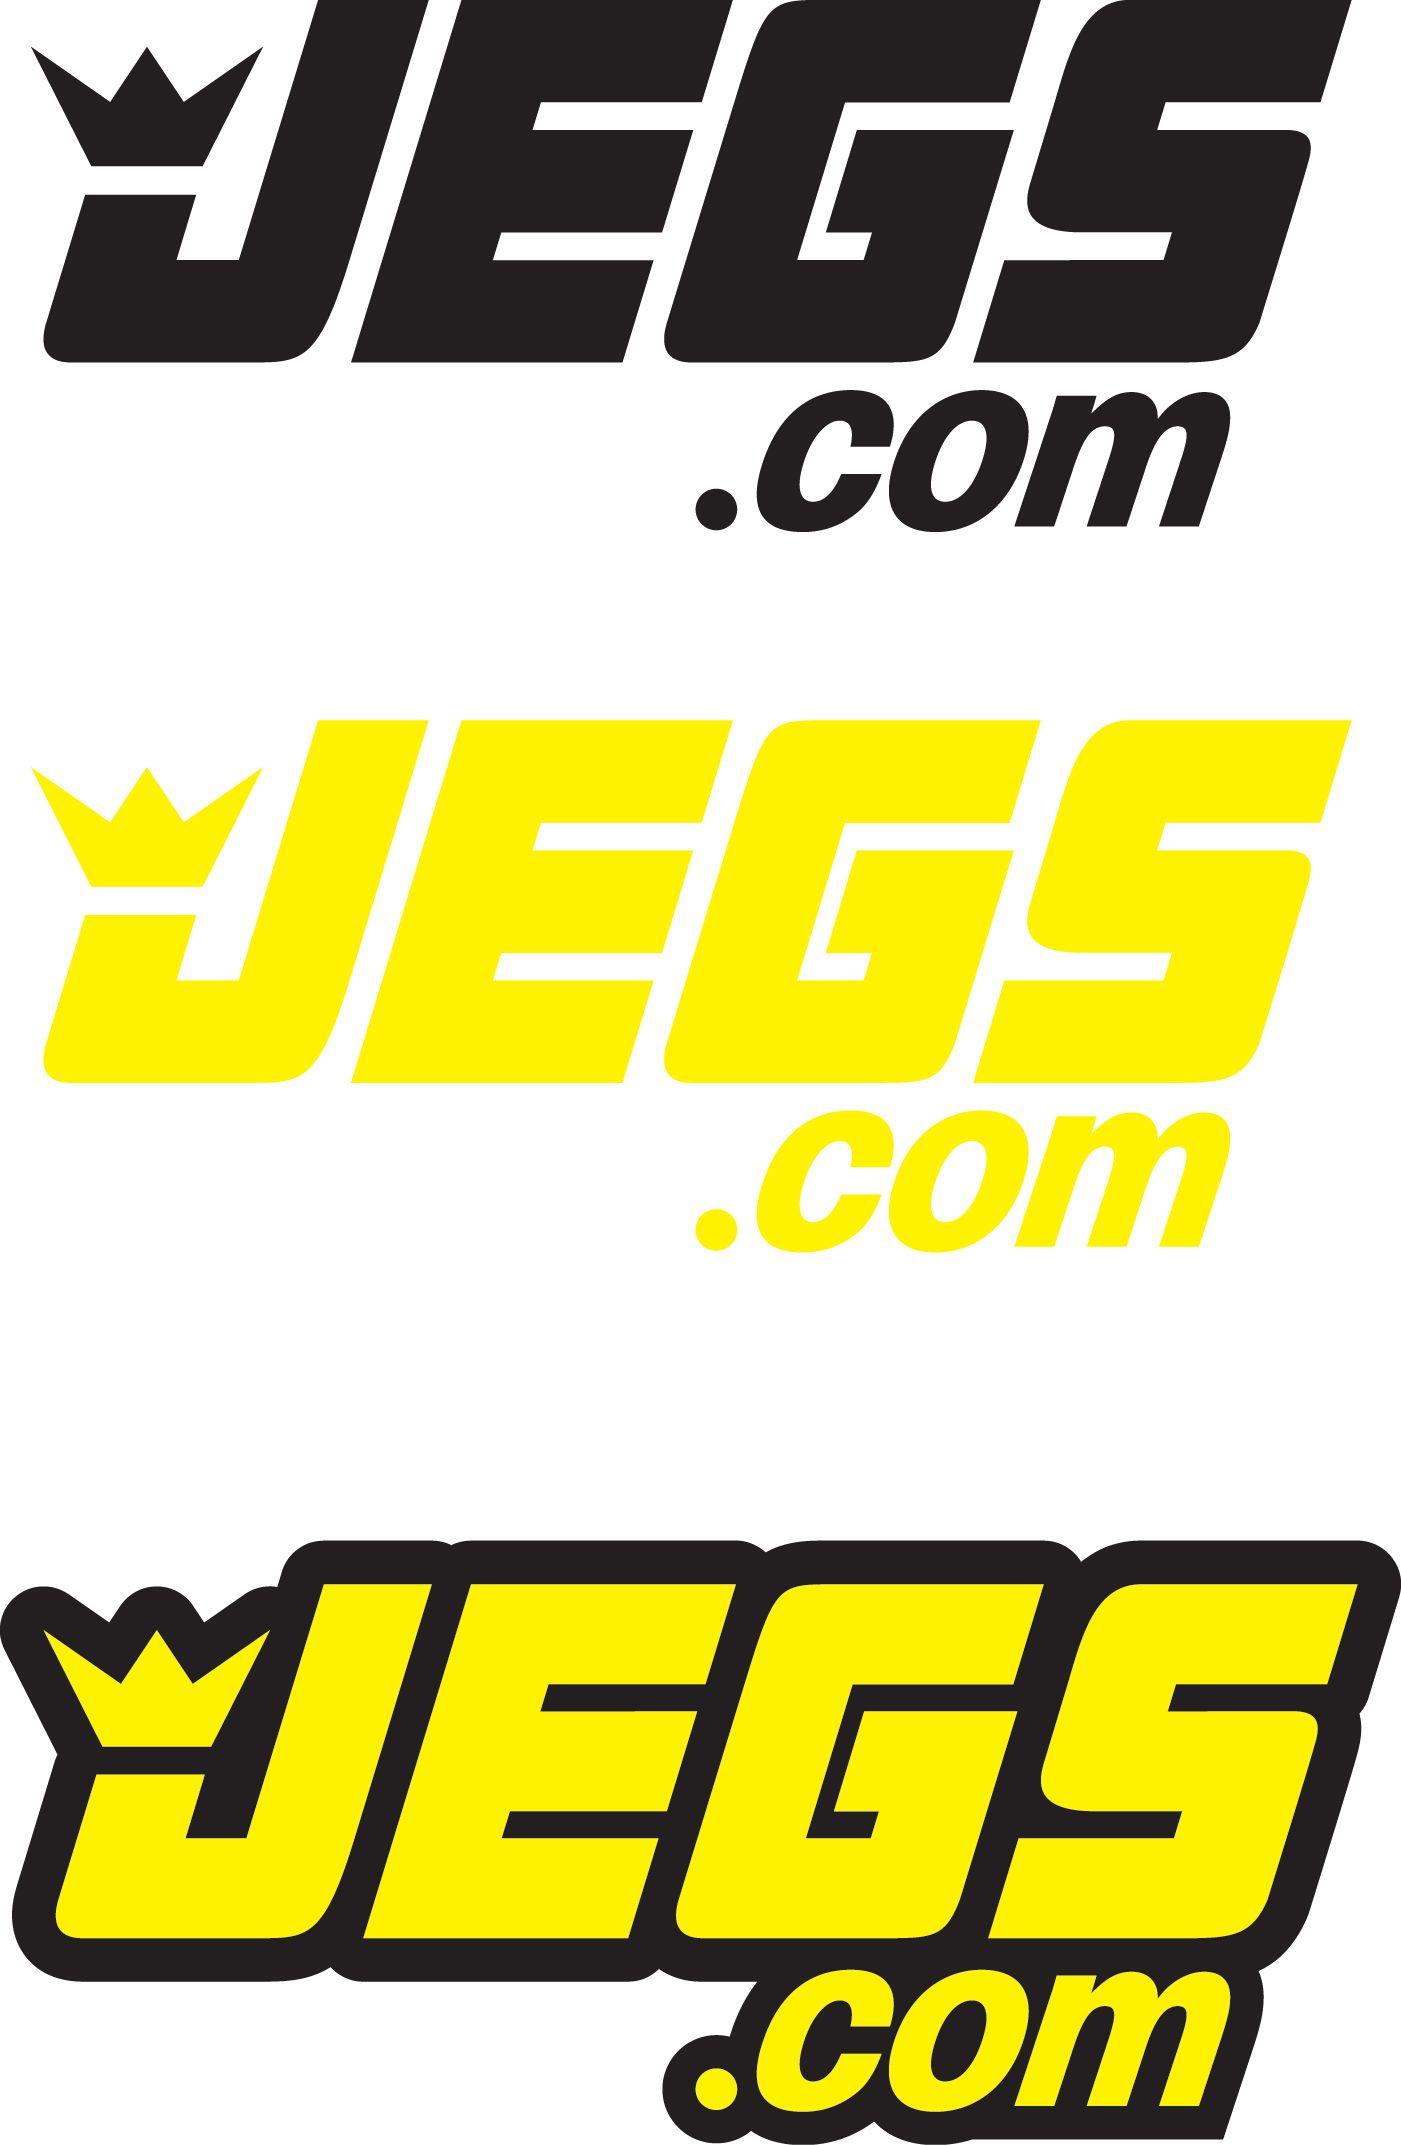 JEGS Logo - Logos & Brand Standards | teamjegs.com